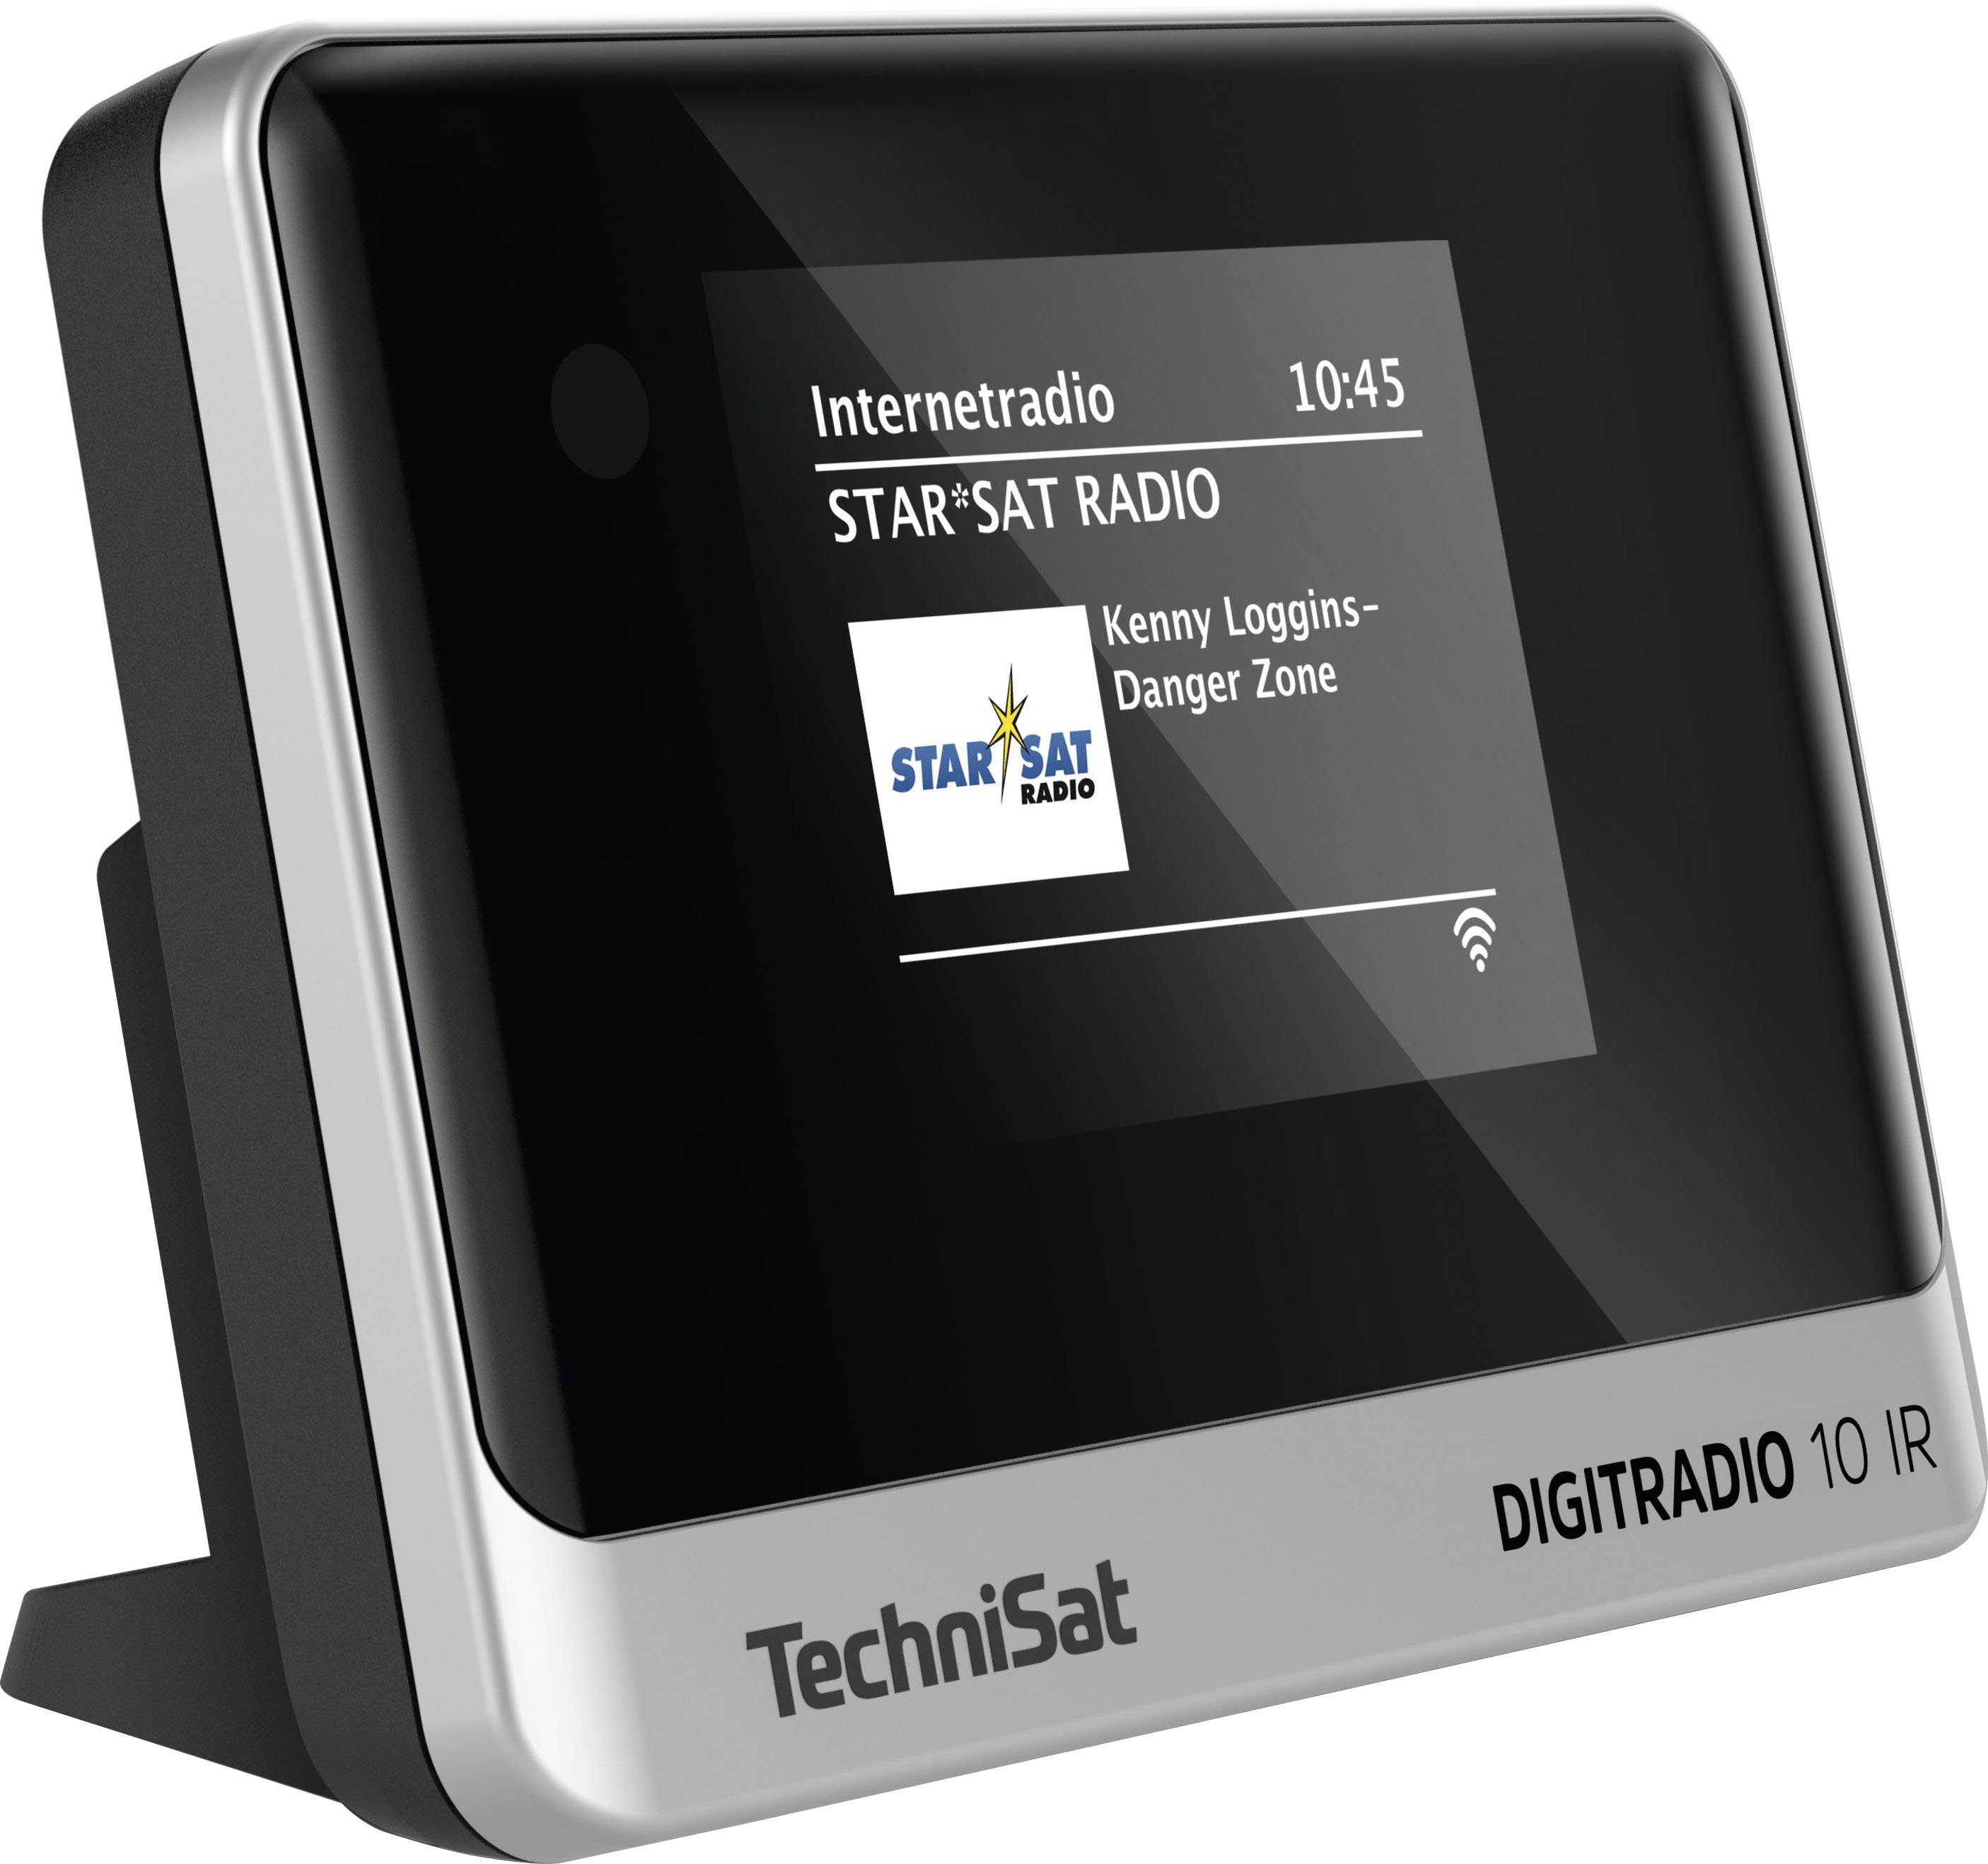 TechniSat DIGITRADIO 10 Internetradio, mit UKW IR (Digitalradio Internet-Radio (DAB), RDS)